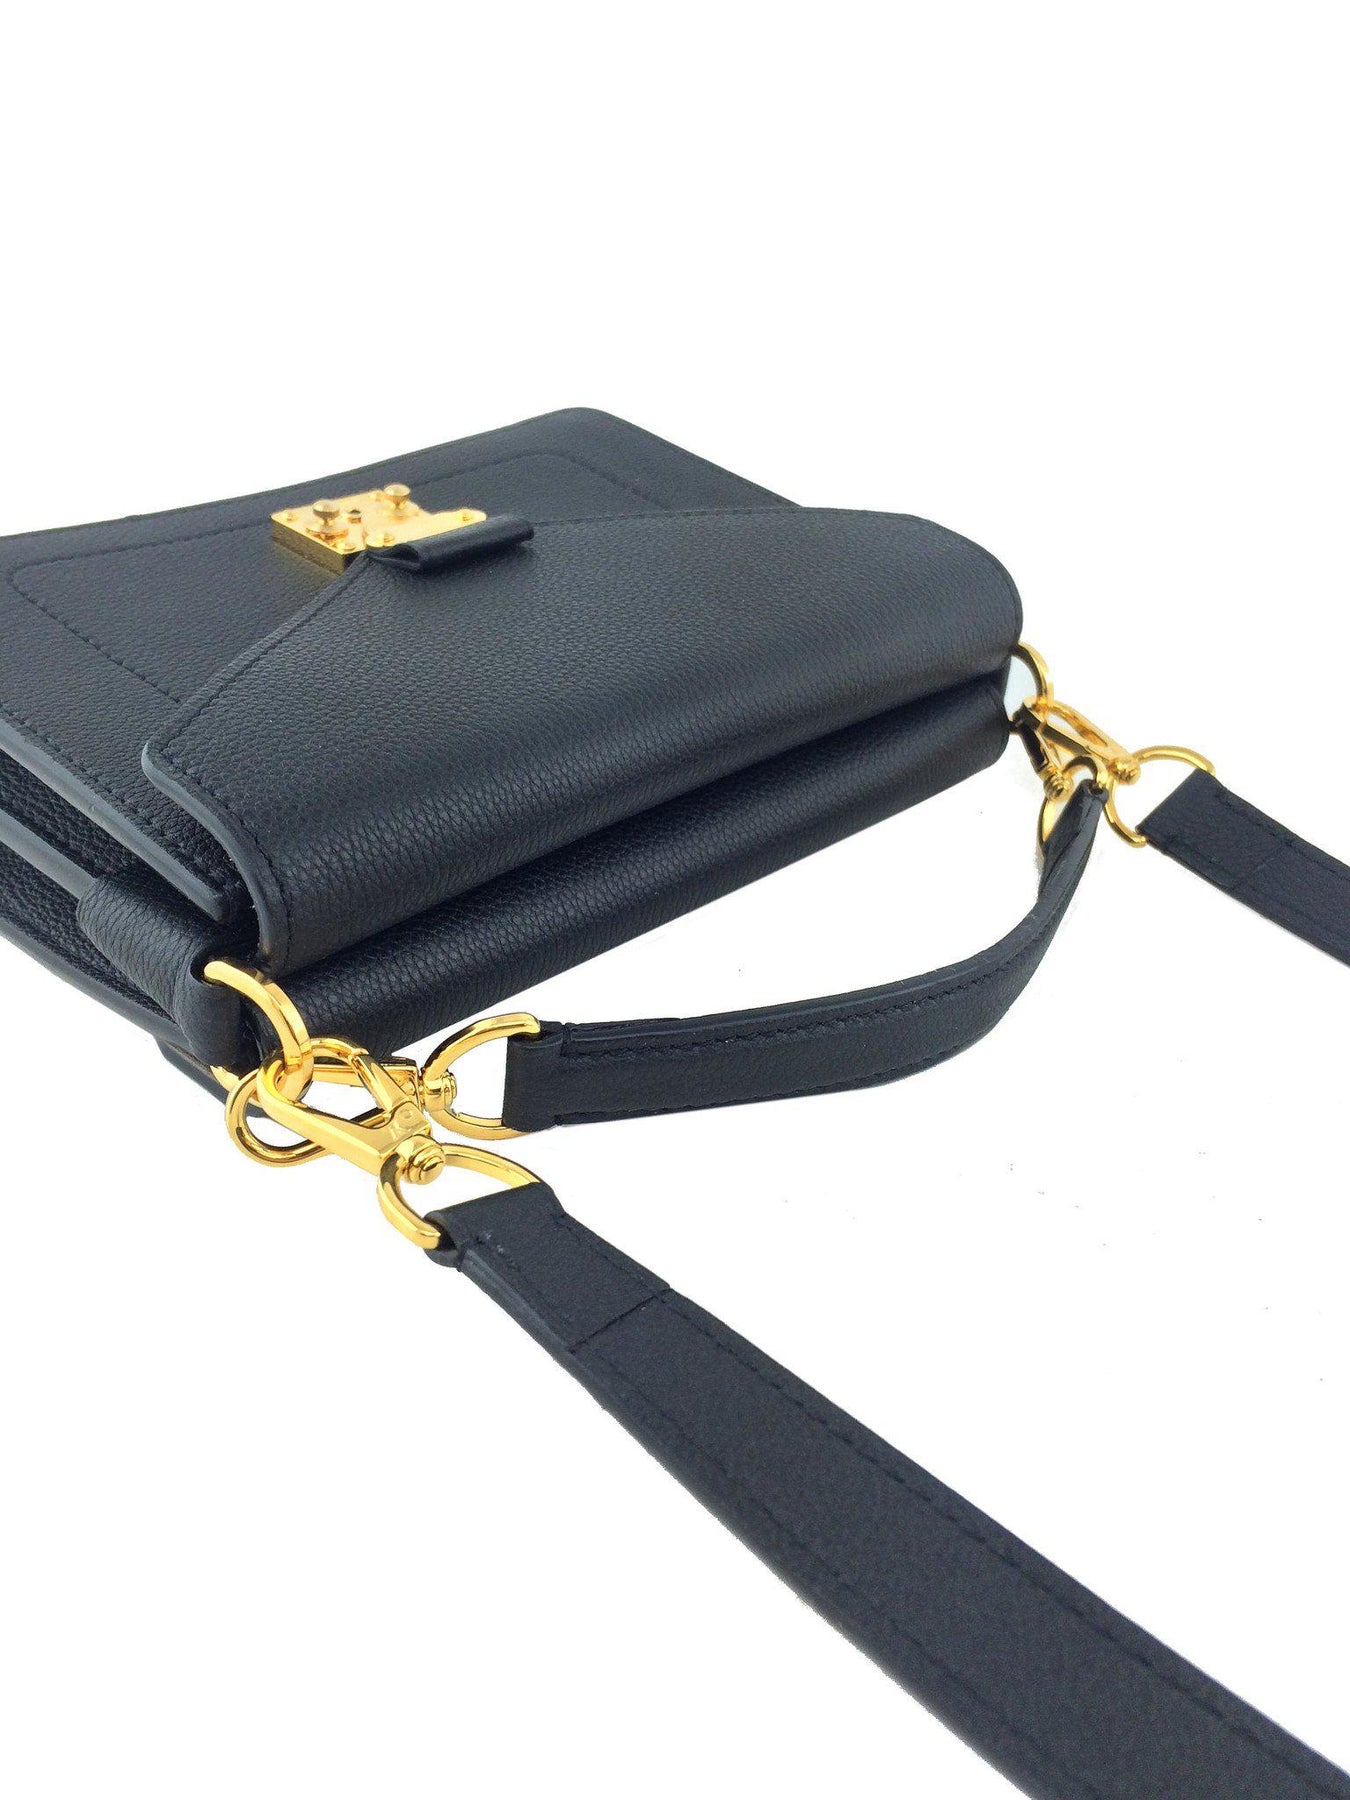 Louis Vuitton Biface Bag - Consigned Designs